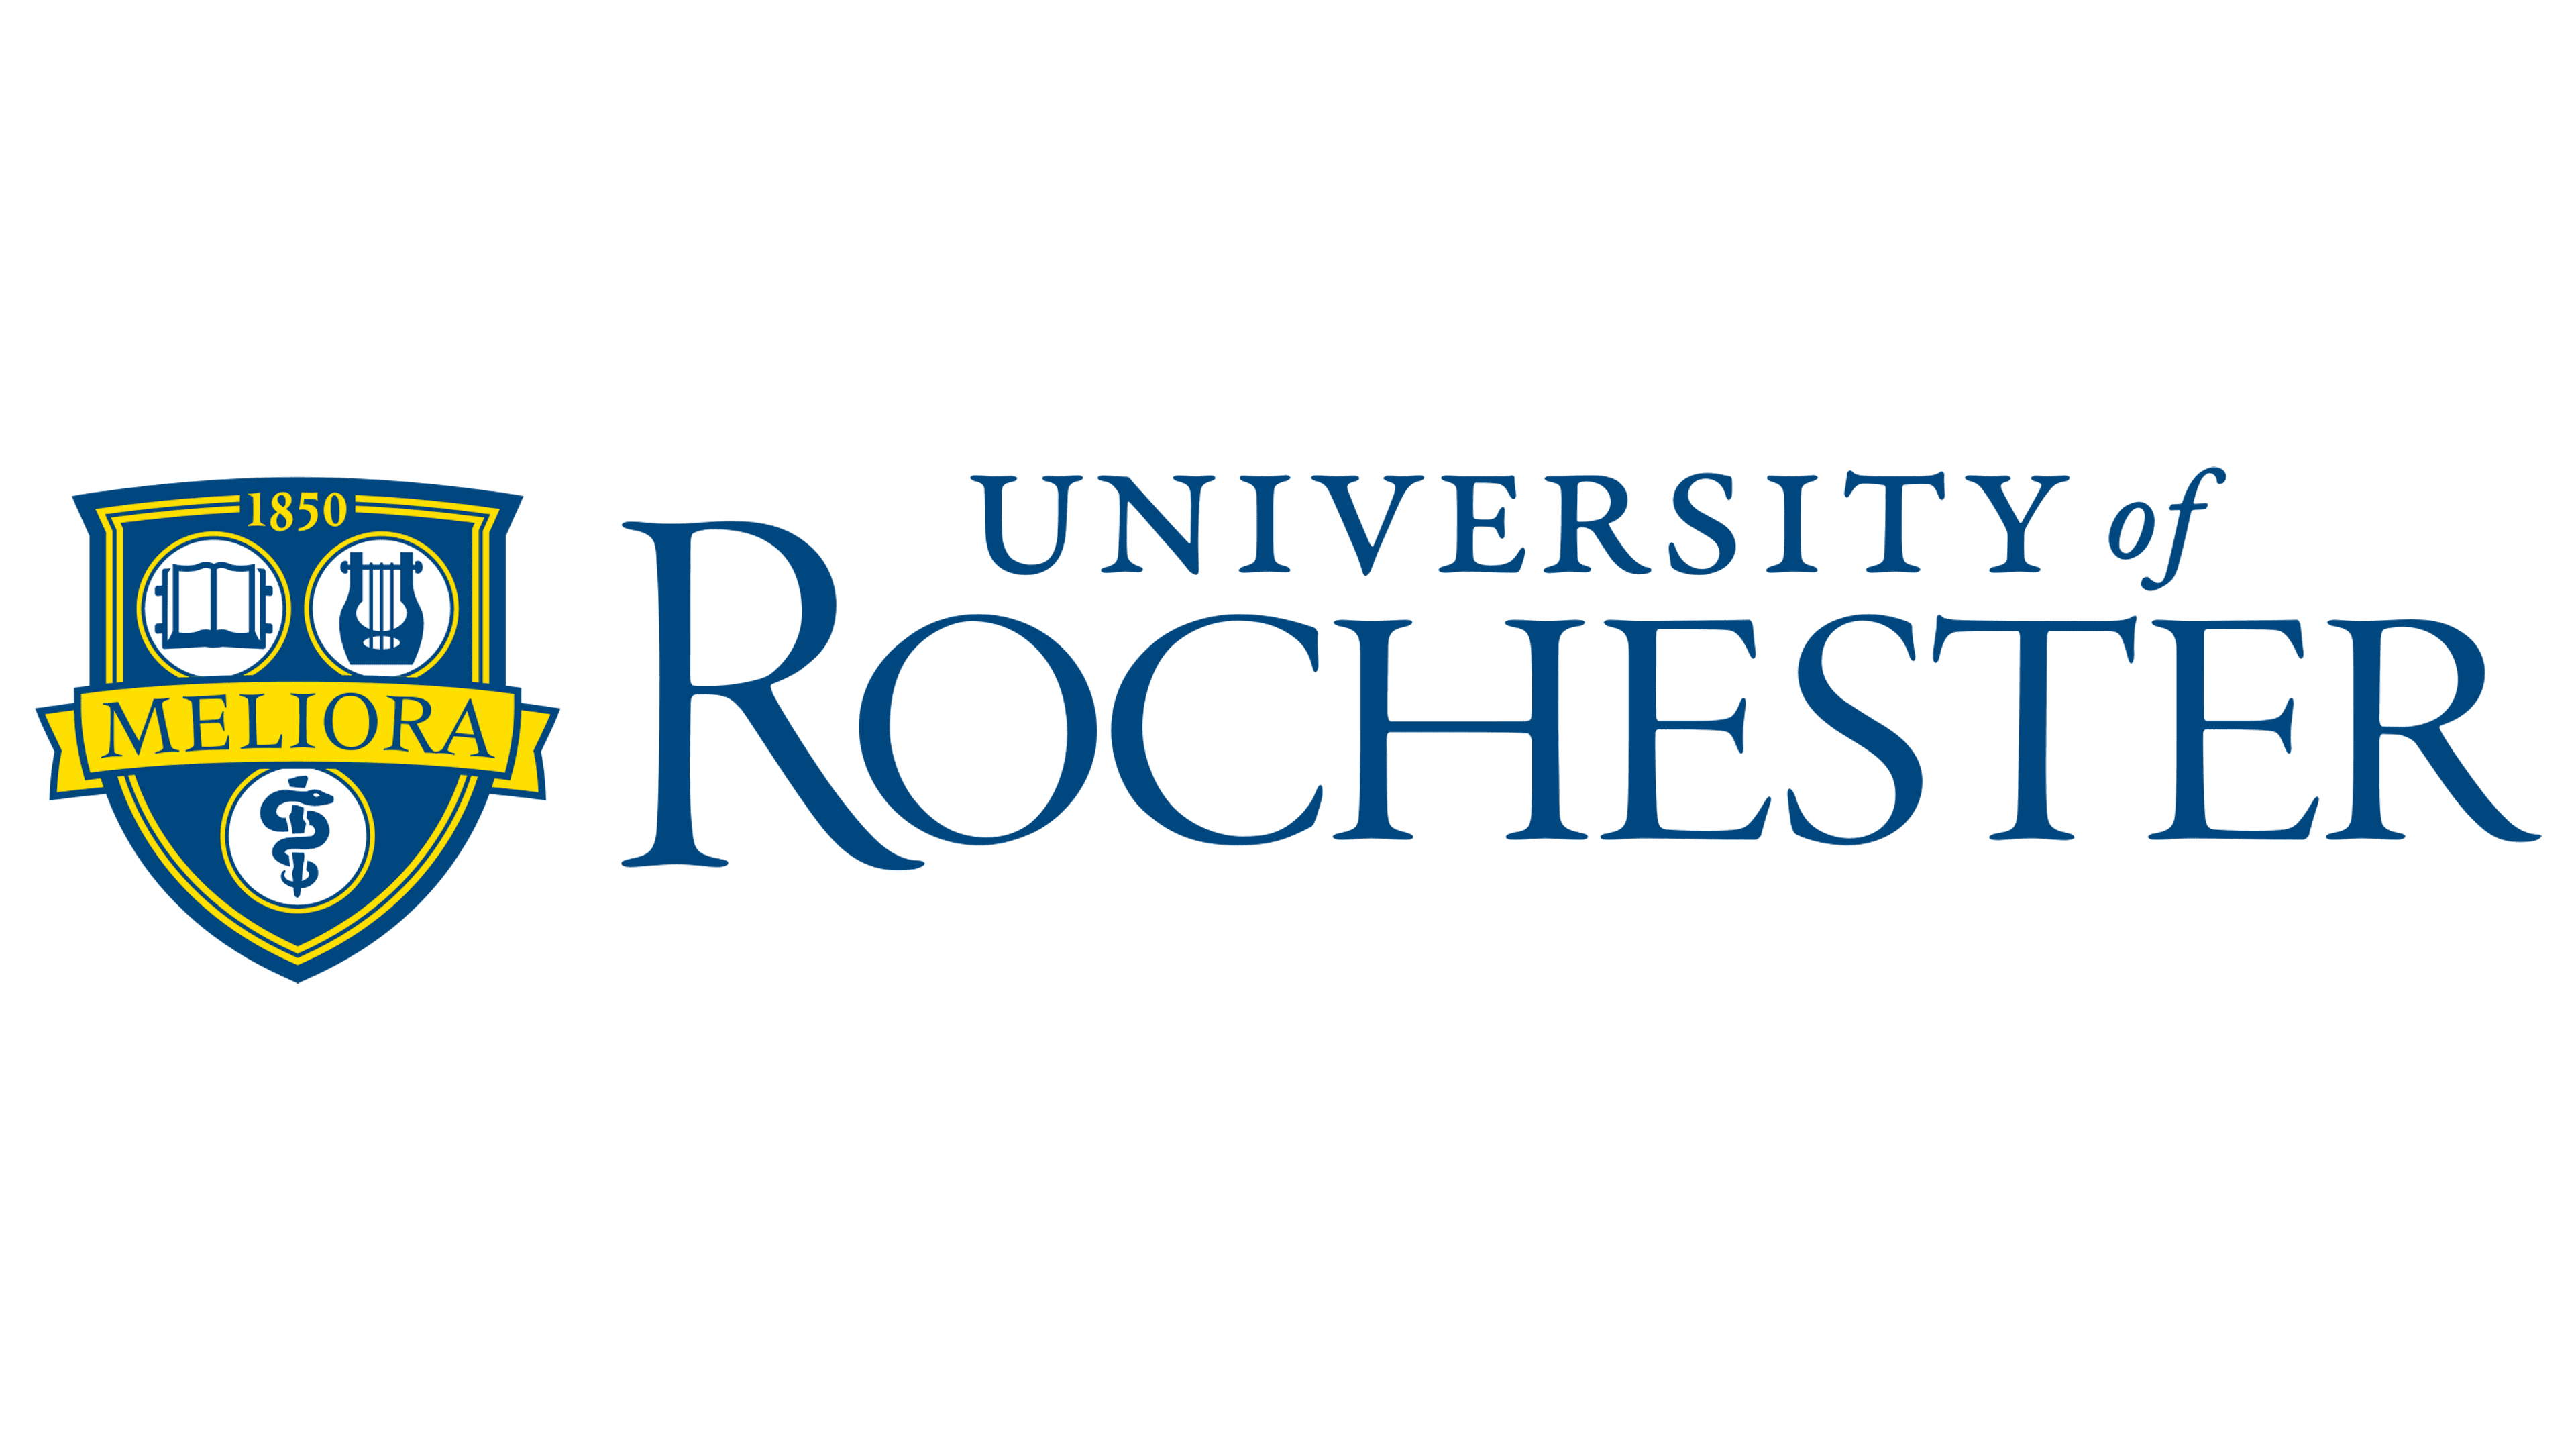 university-of-rochester